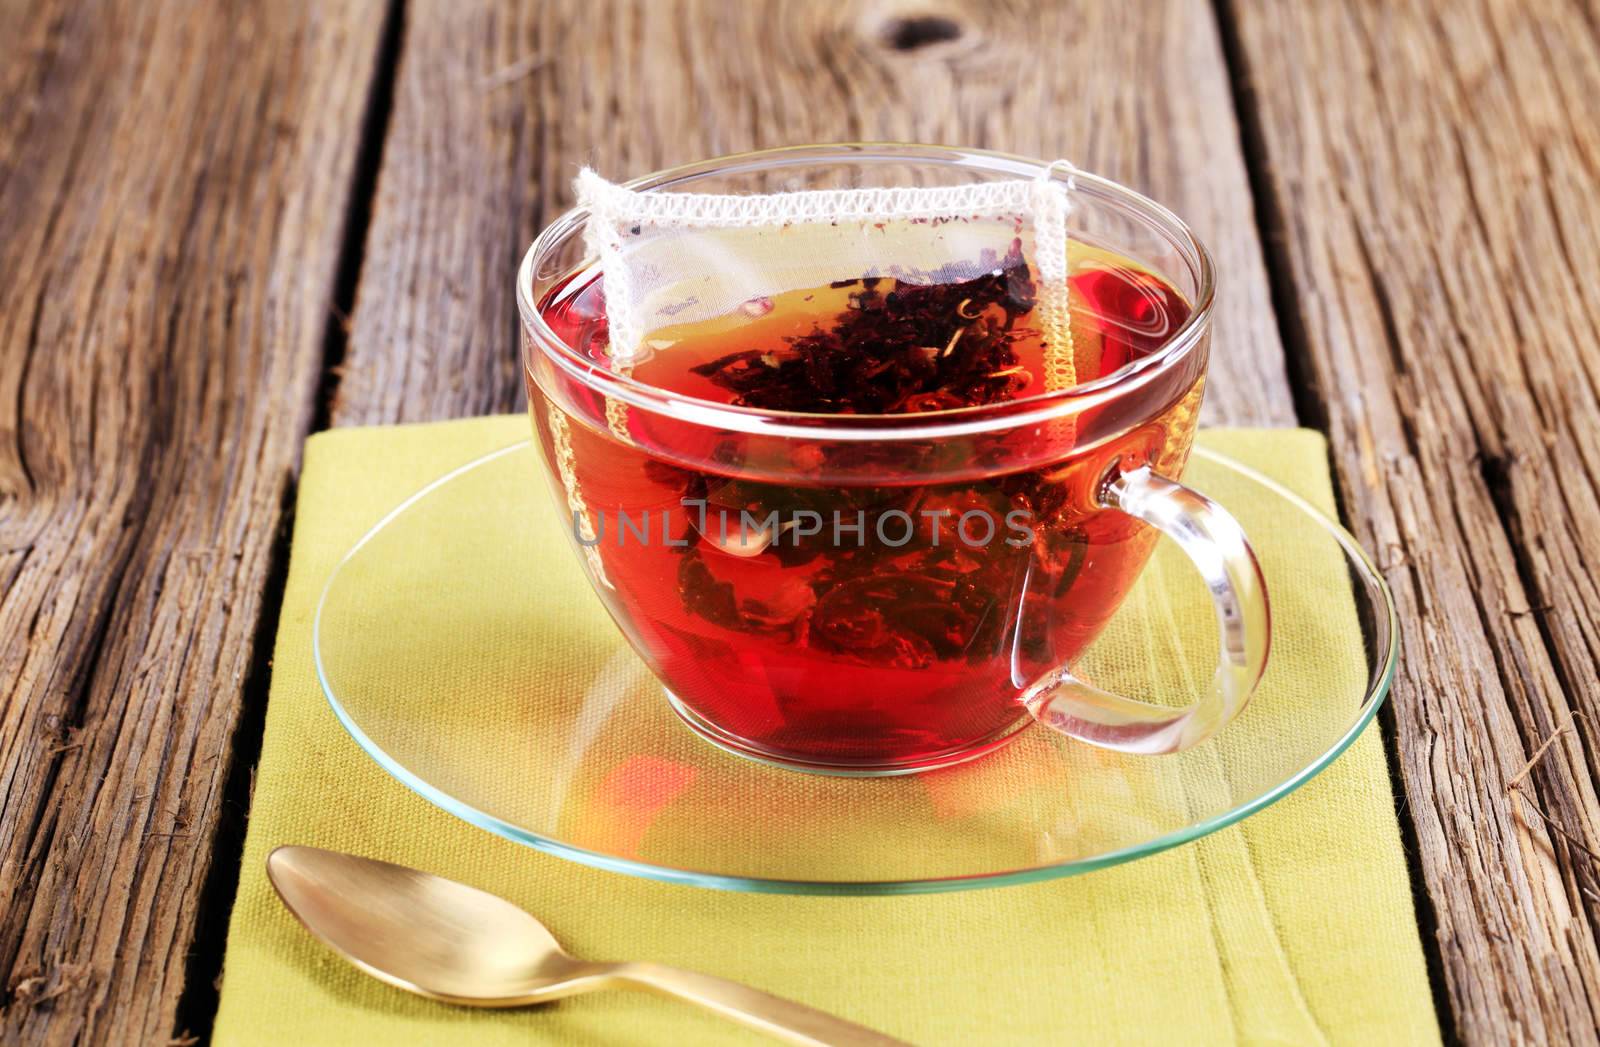 Fruit tea in a glass cup - closeup